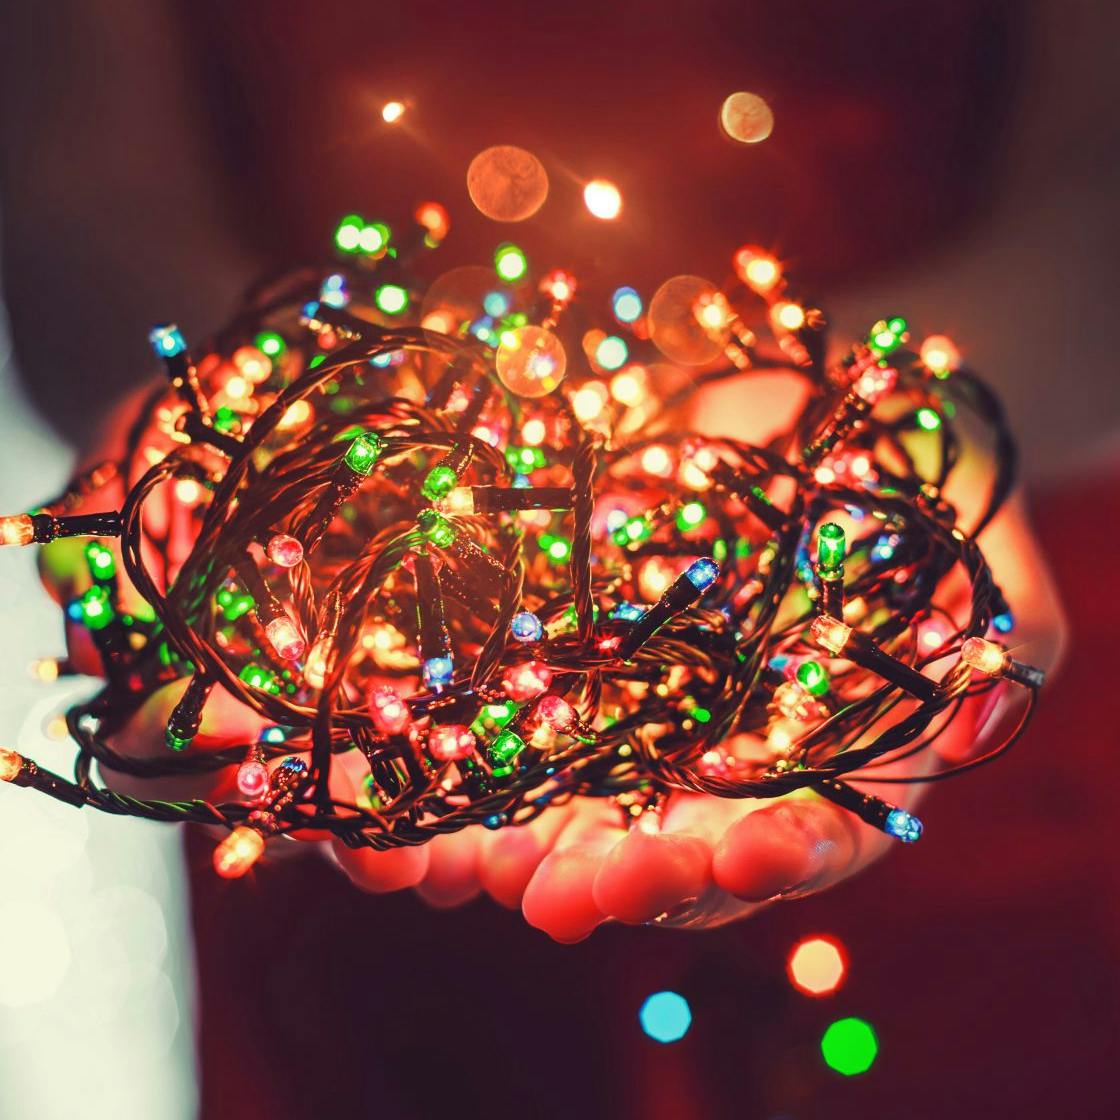 Why you shouldn't take your Christmas lights down